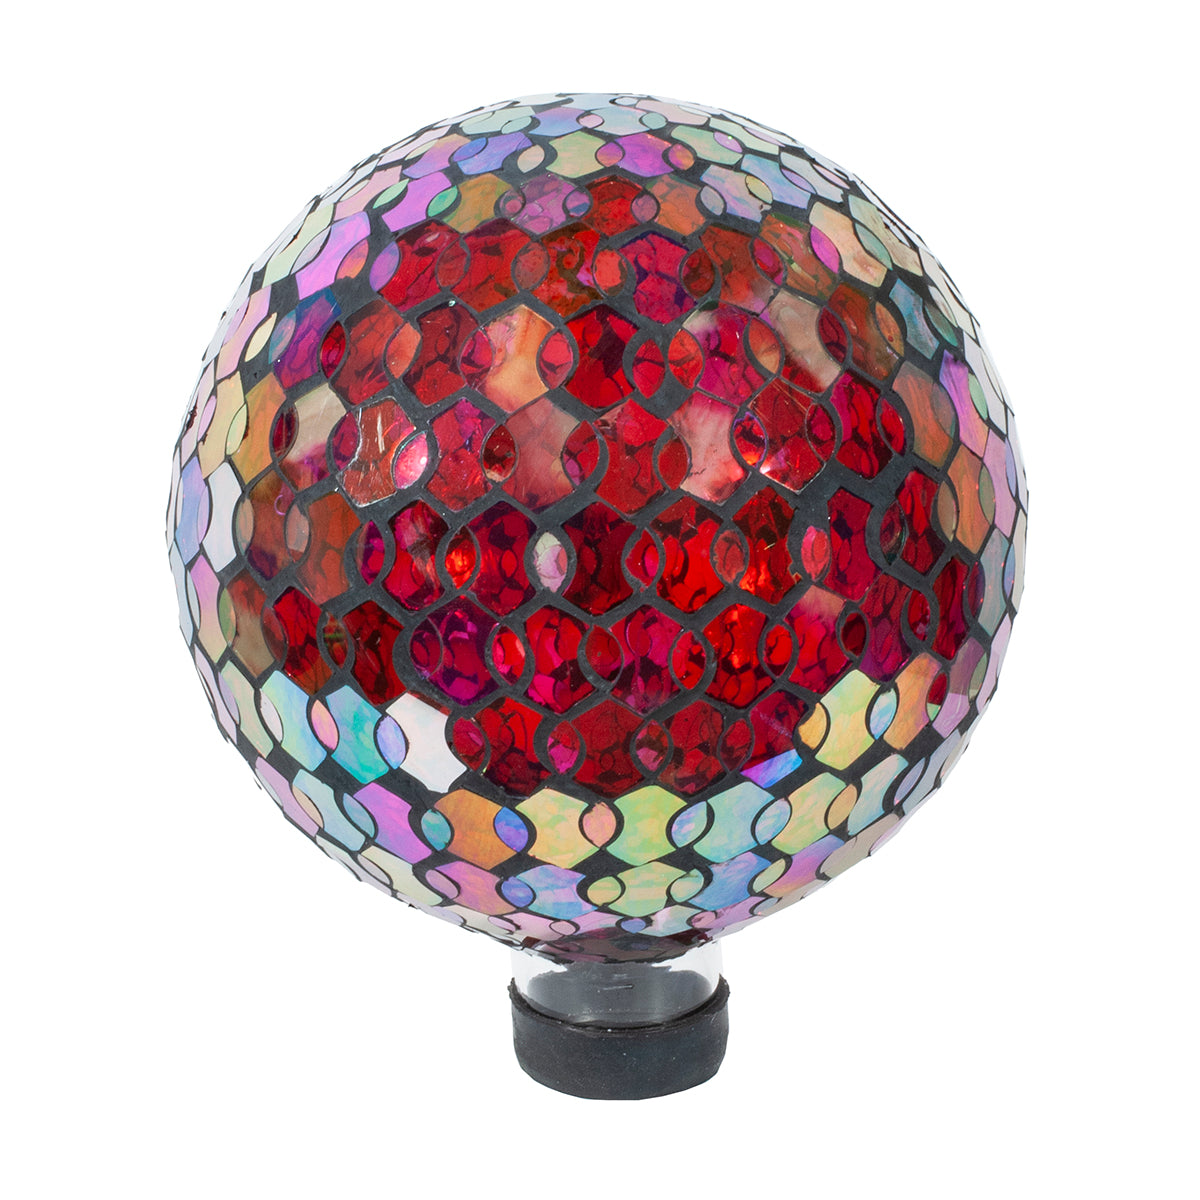 10" Helix Iridescent Mosaic Globe